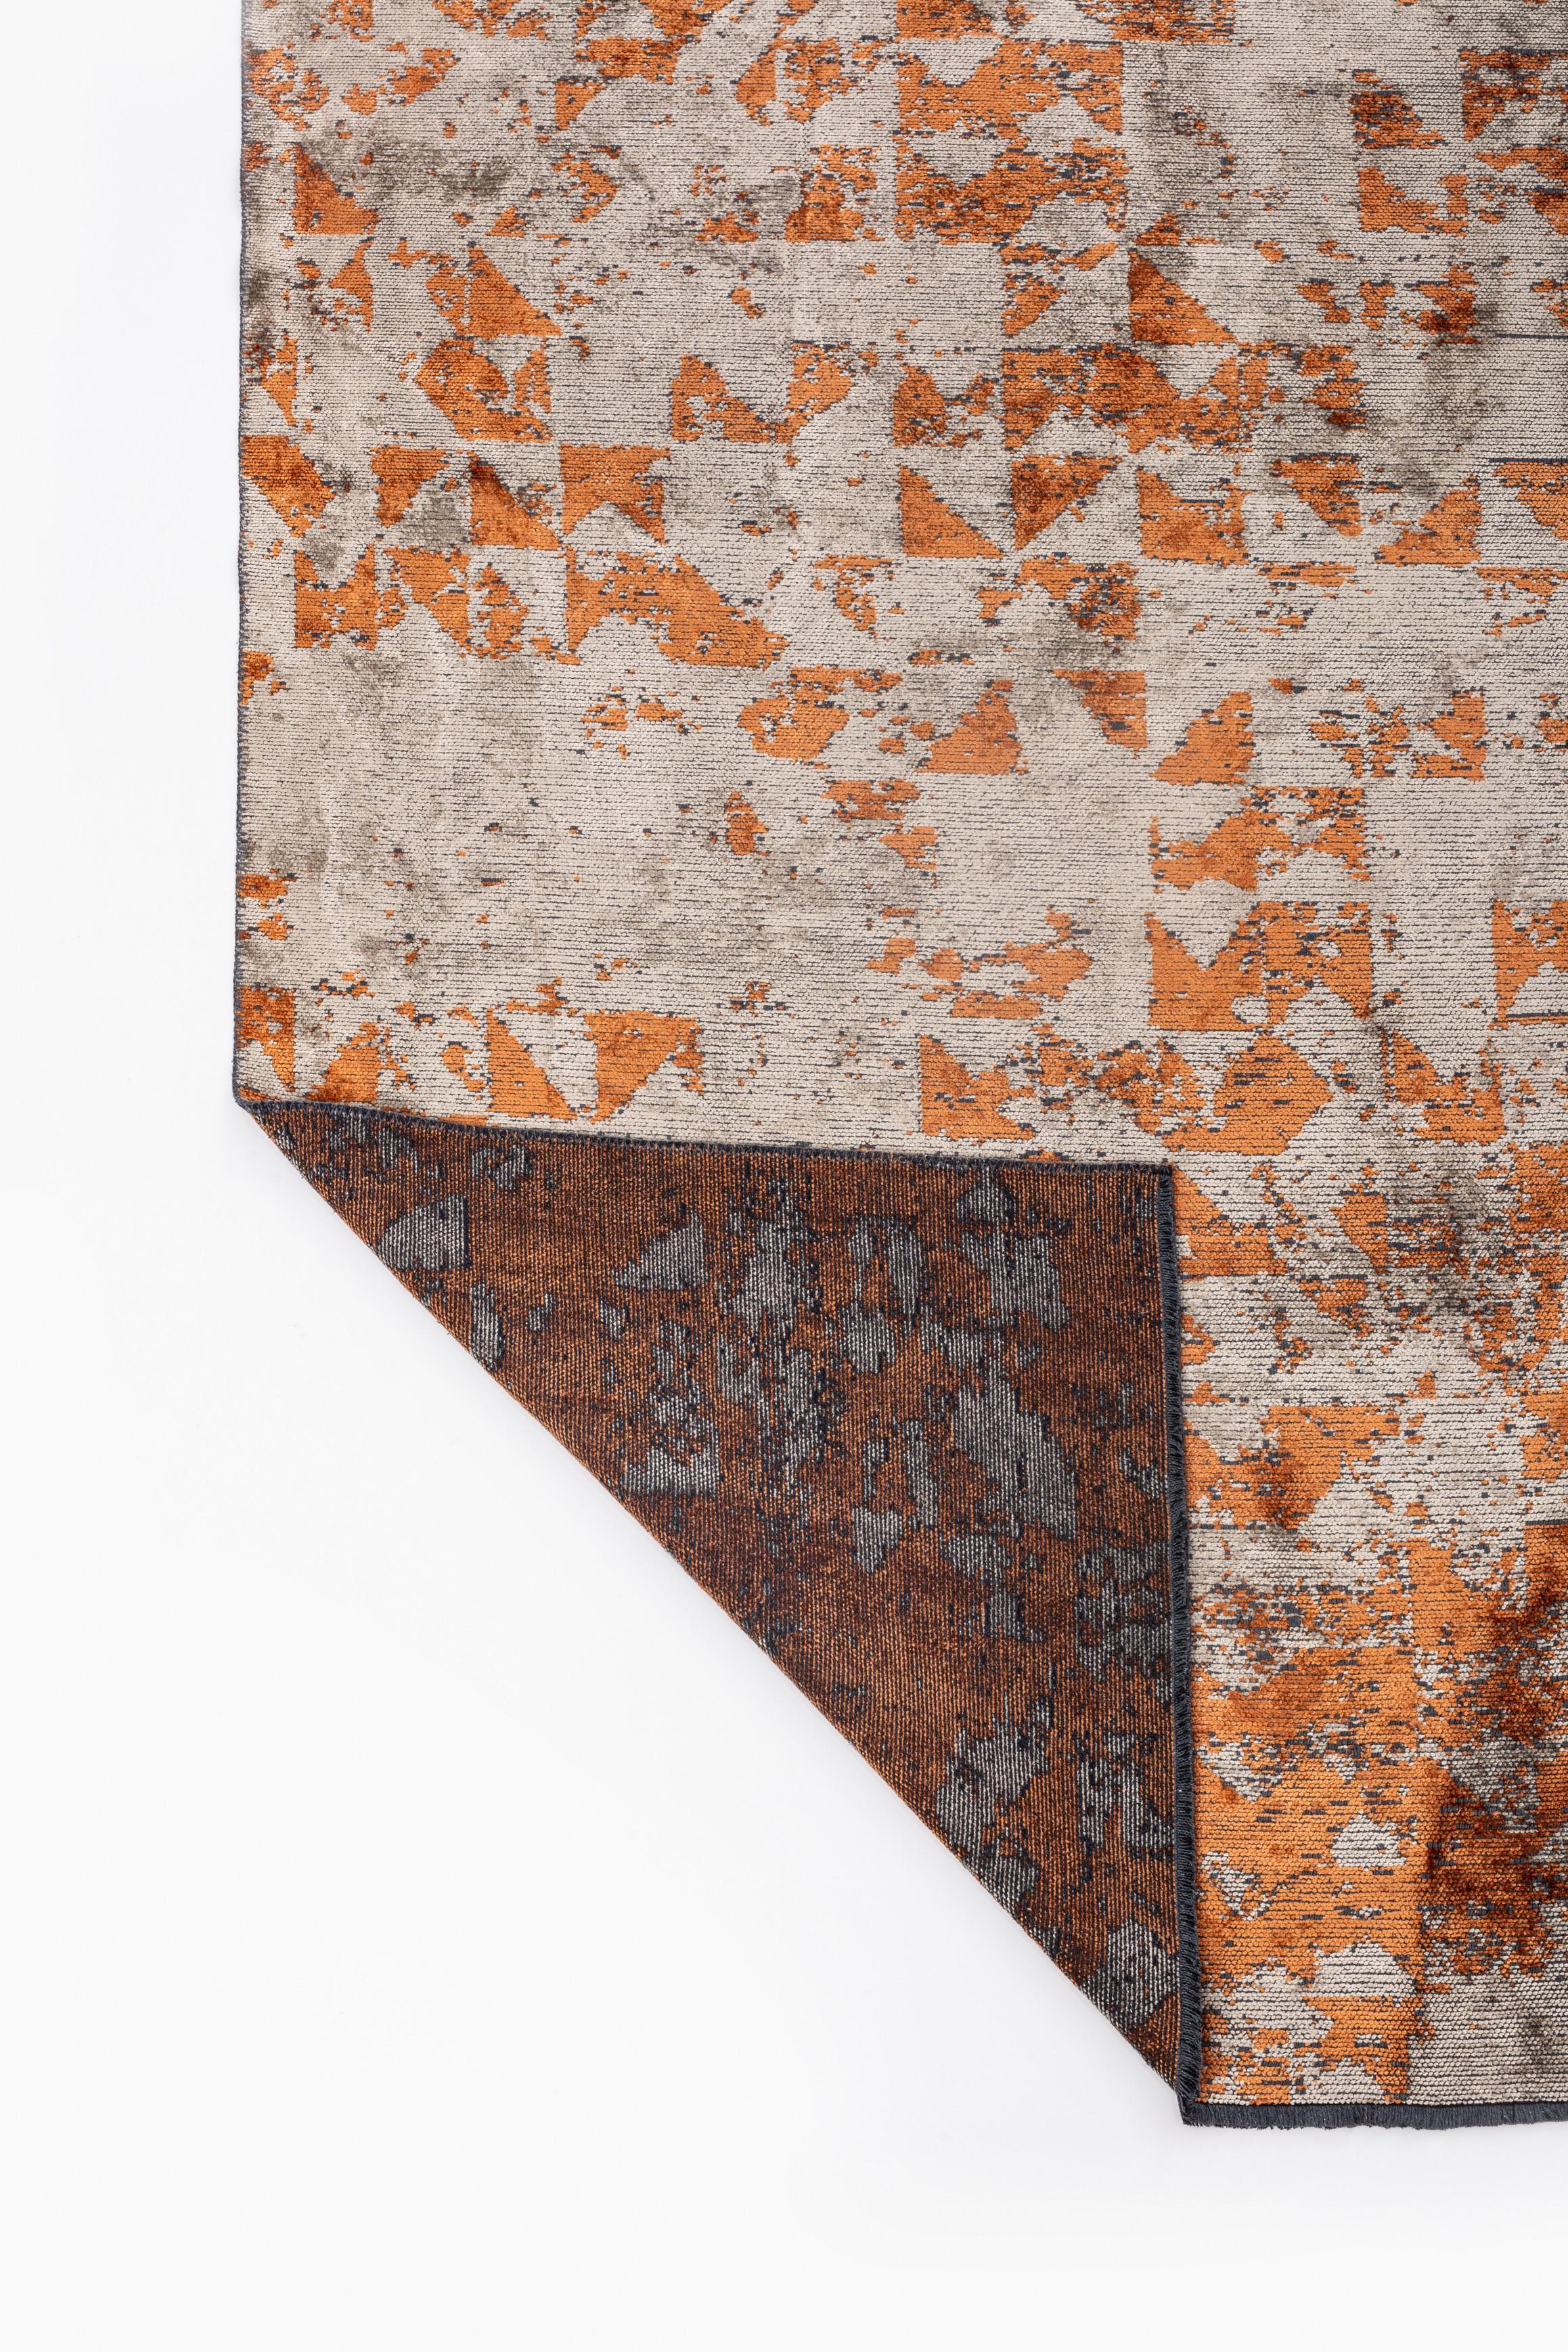 For Sale:  (Orange) Modern Camouflage Luxury Hand-Finished Area Rug 3